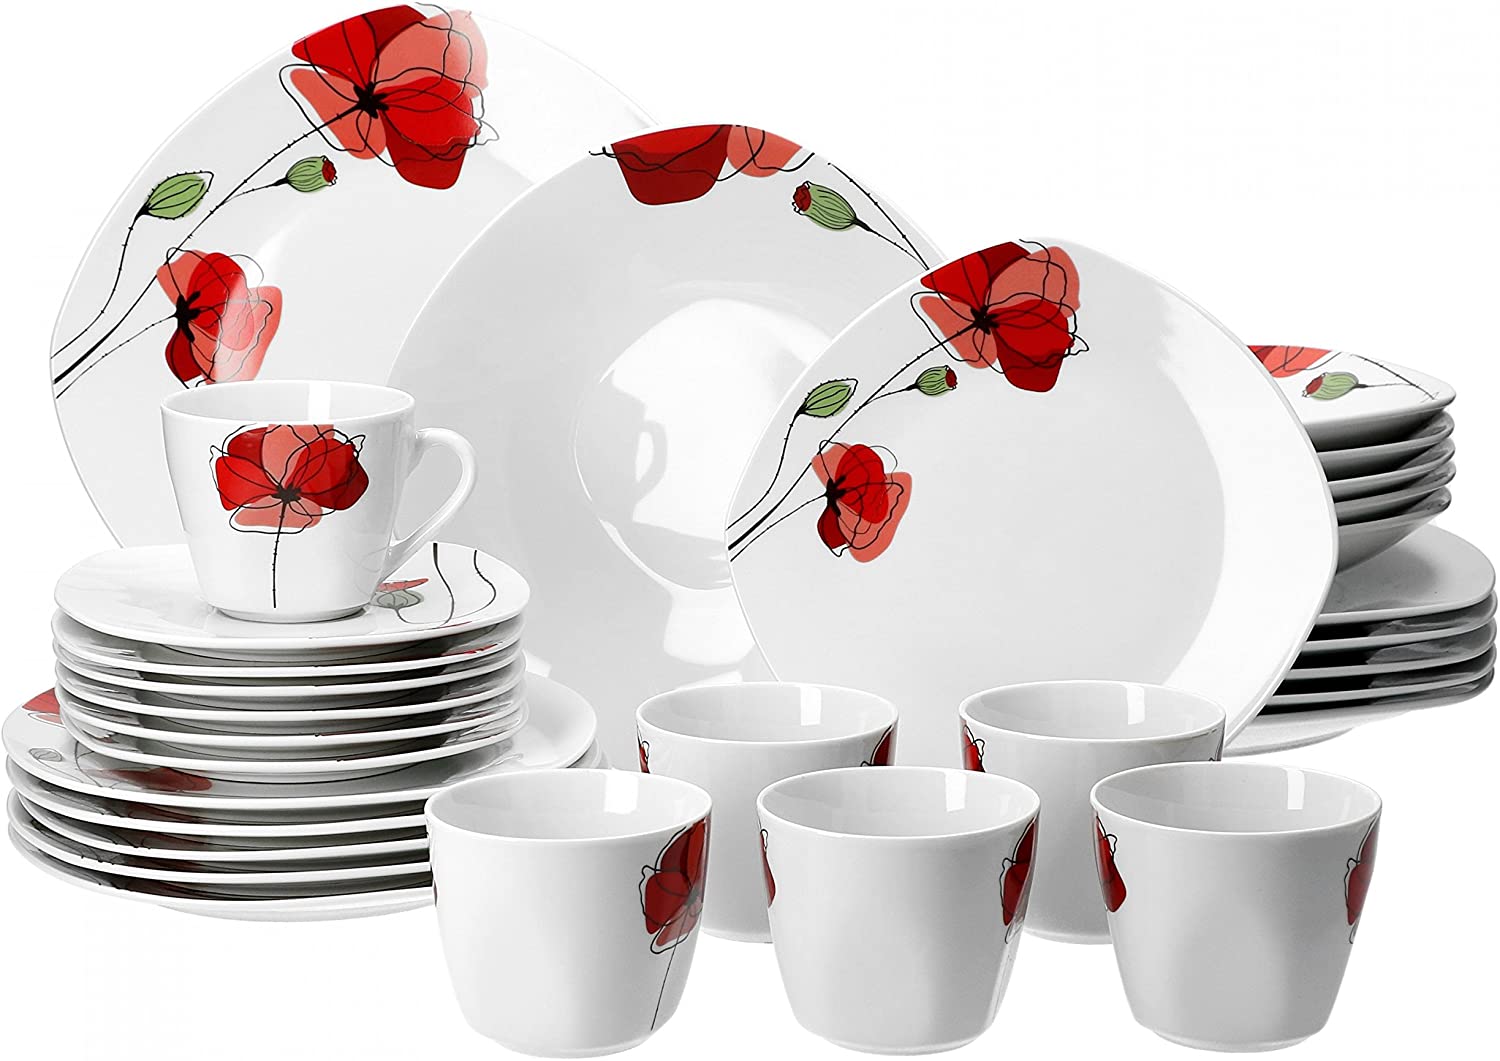 Van Well Monika 30-Piece Crockery Set for 6 People Fine Branded Porcelain Flower Design Dinner Service Coffee Service Crockery Accessories